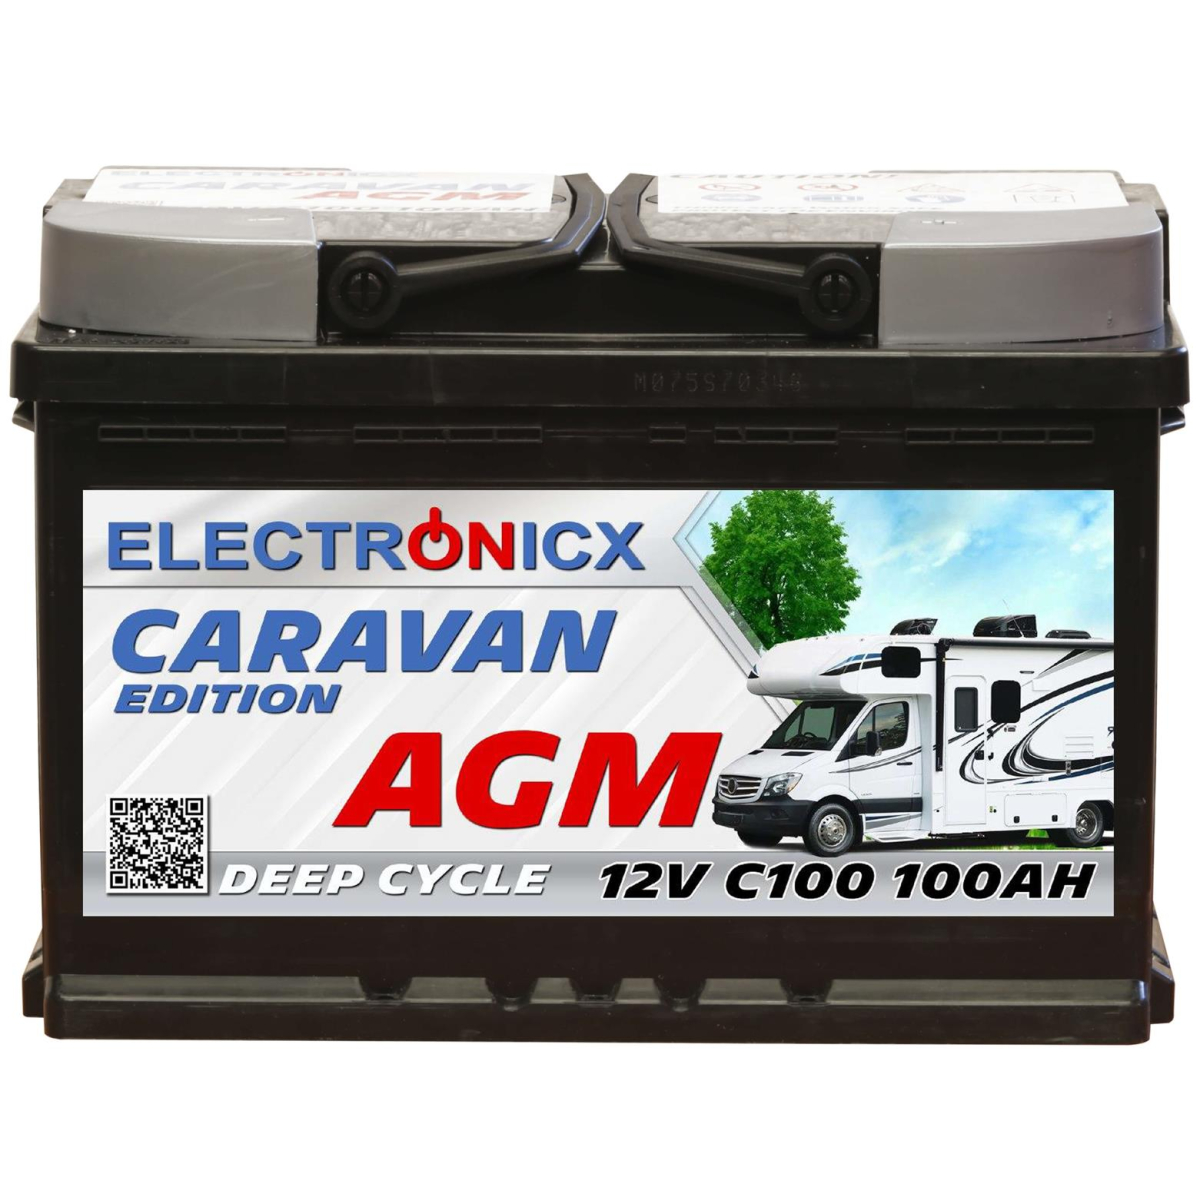 Electronicx Caravan Edition v2 battery agm 100 ah 12v motorhome boat supply